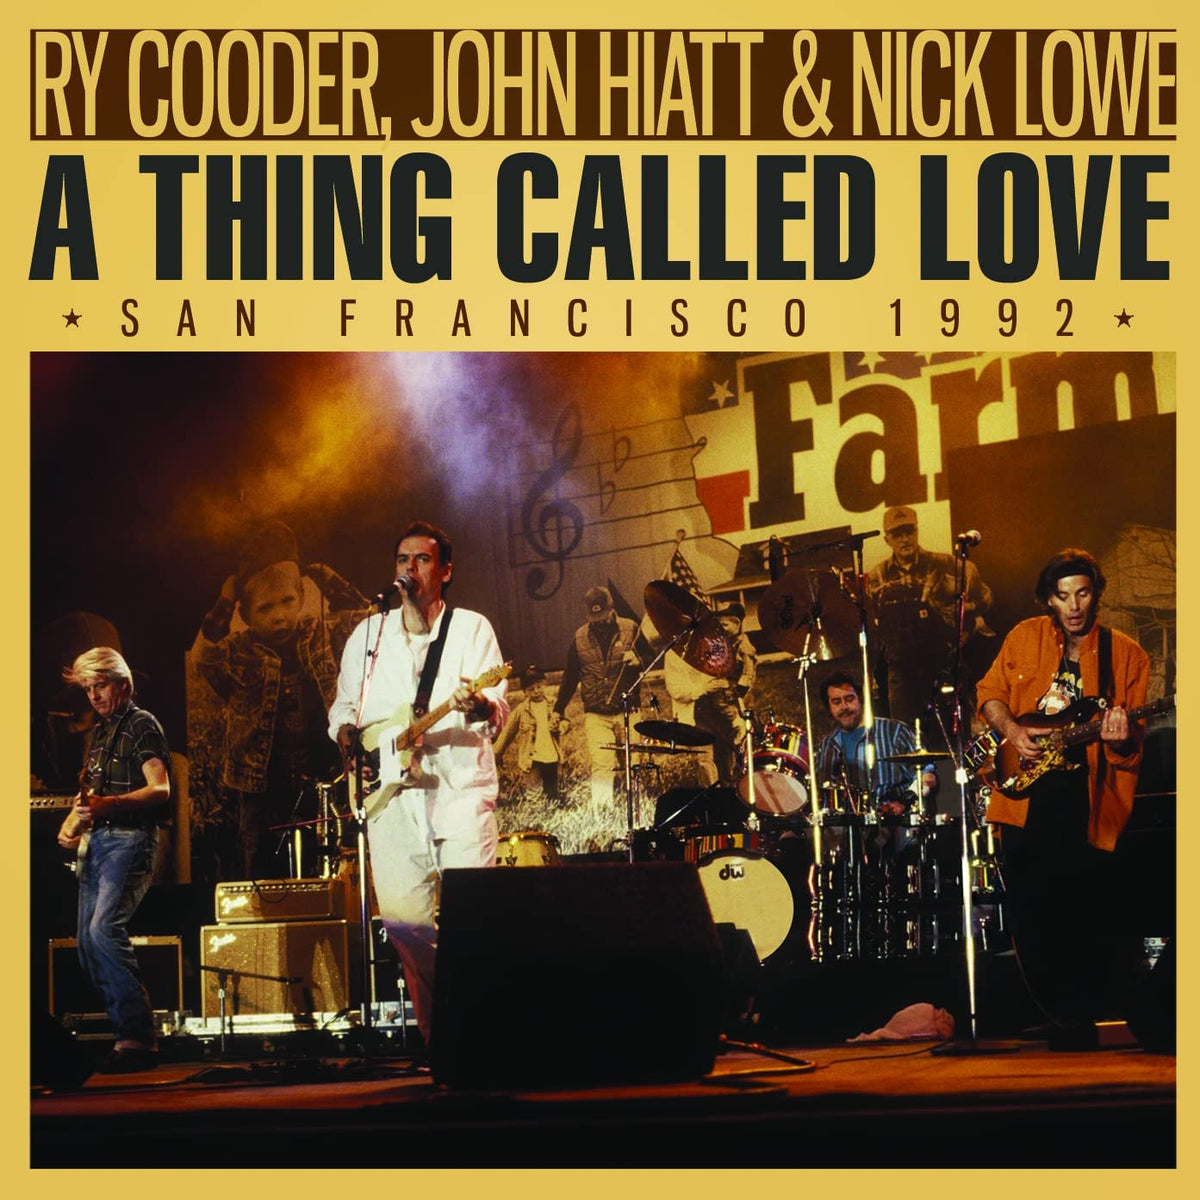 Ry Cooder, John Hiatt & Nick Lowe - A Thing Called Love - Live in San Francisco 1992 - CD